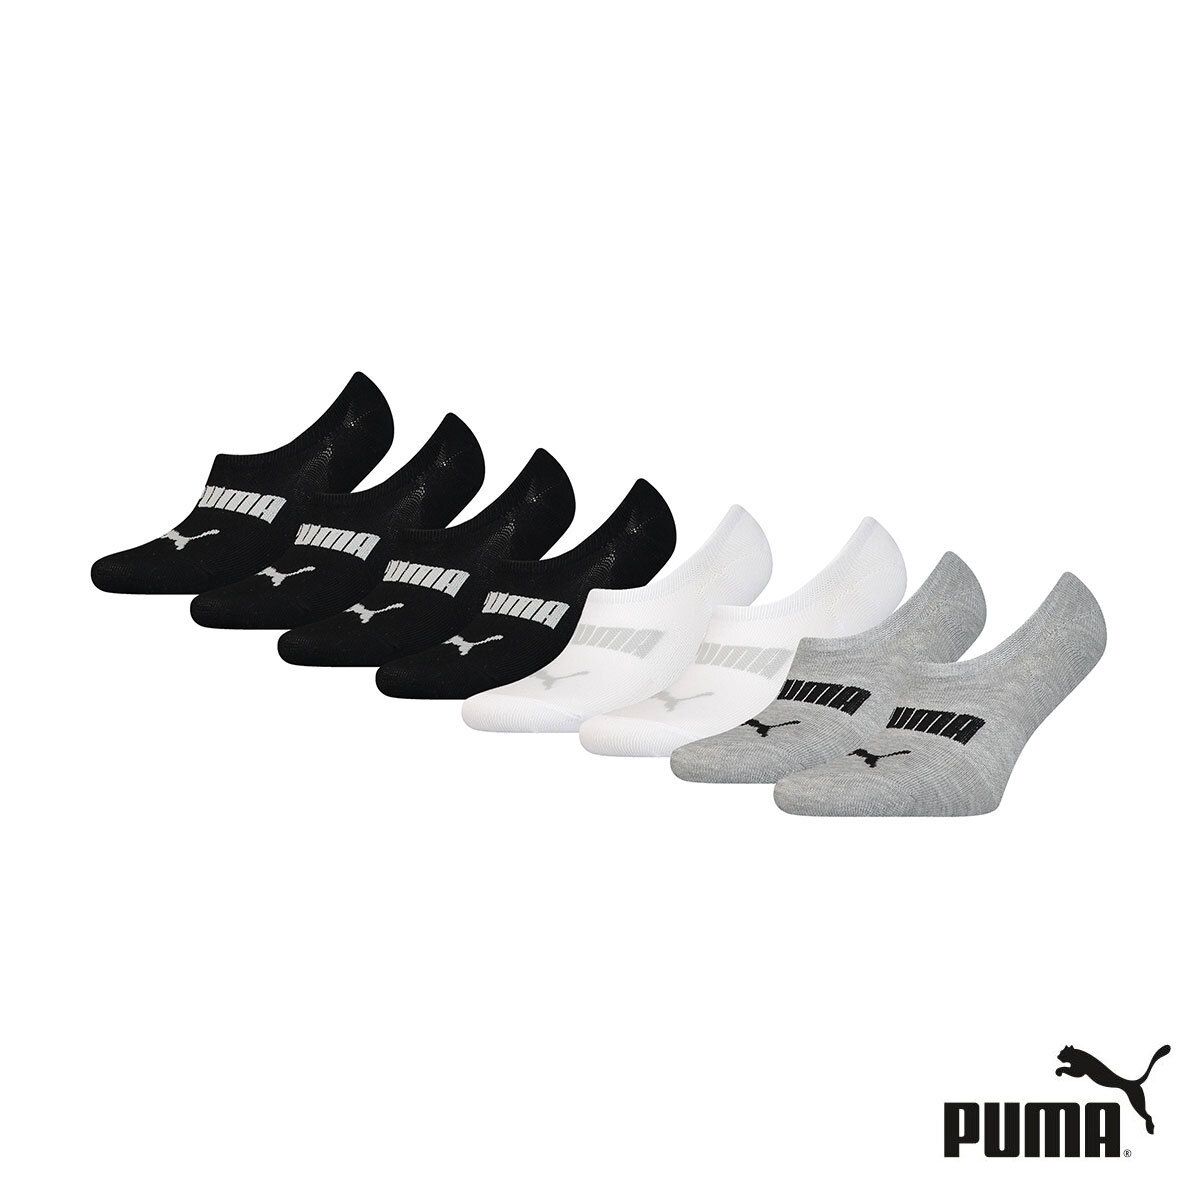 Puma Ladies No Show Sock, 8 Pack in Black